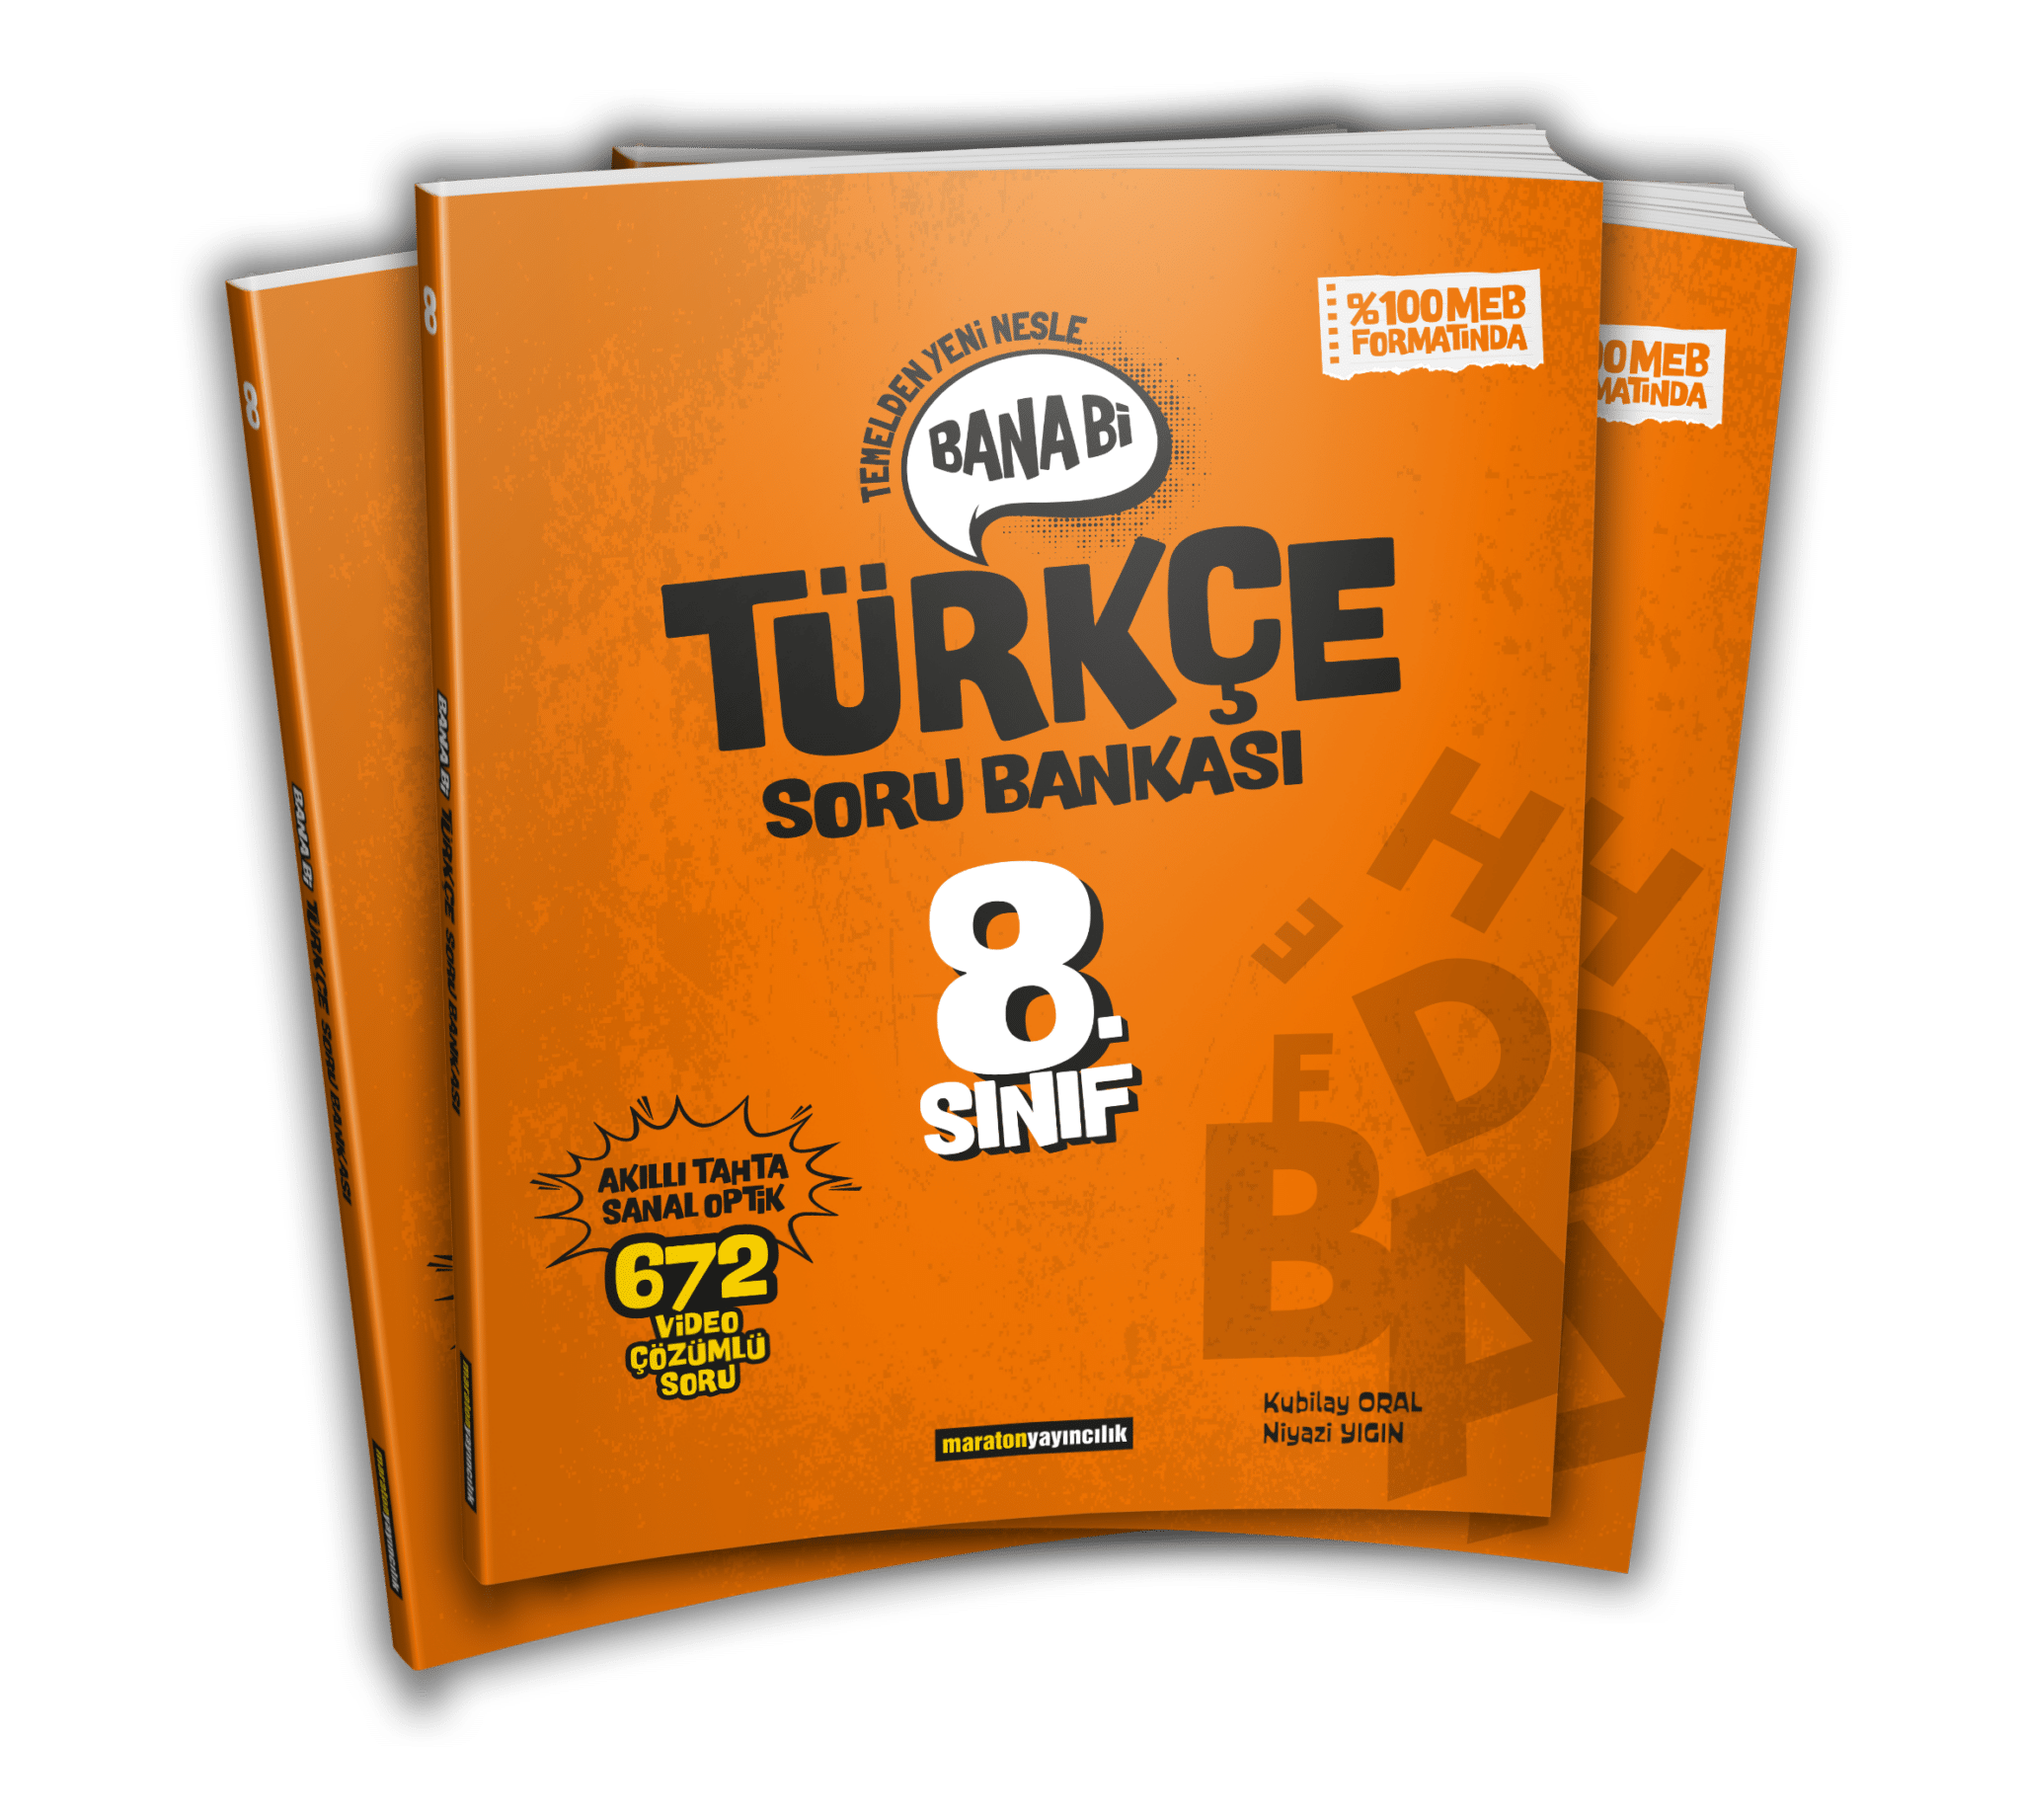 8. Sınıf Bana Bi Türkçe Soru Bankası